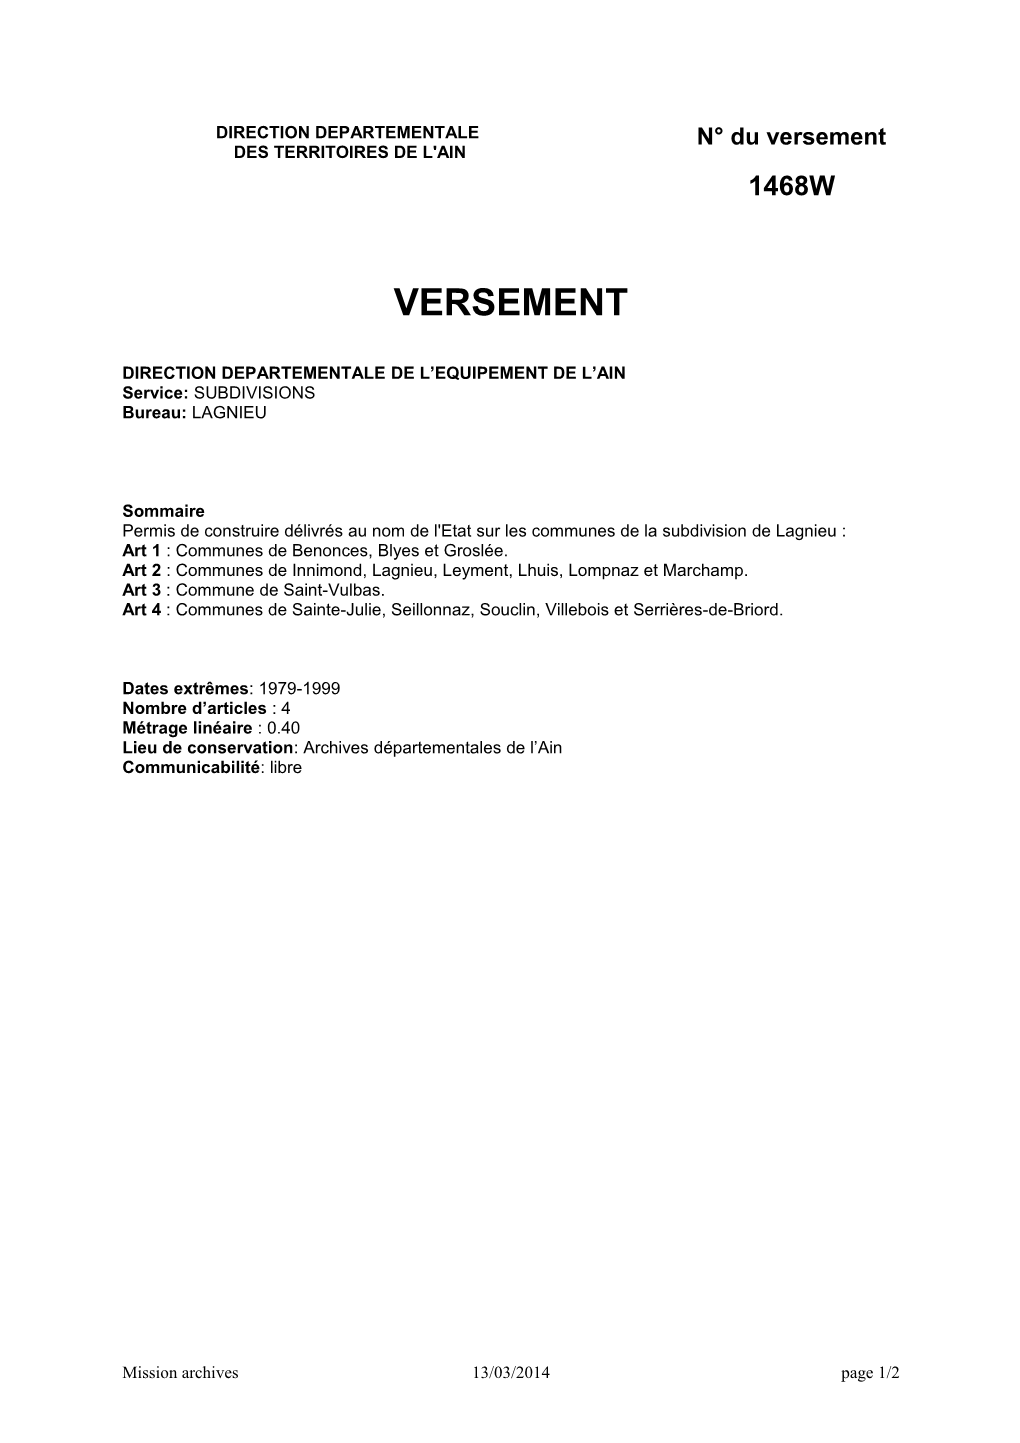 DDE Ain : Permis De Construire (Subdivision De Lagnieu), 1979-1999